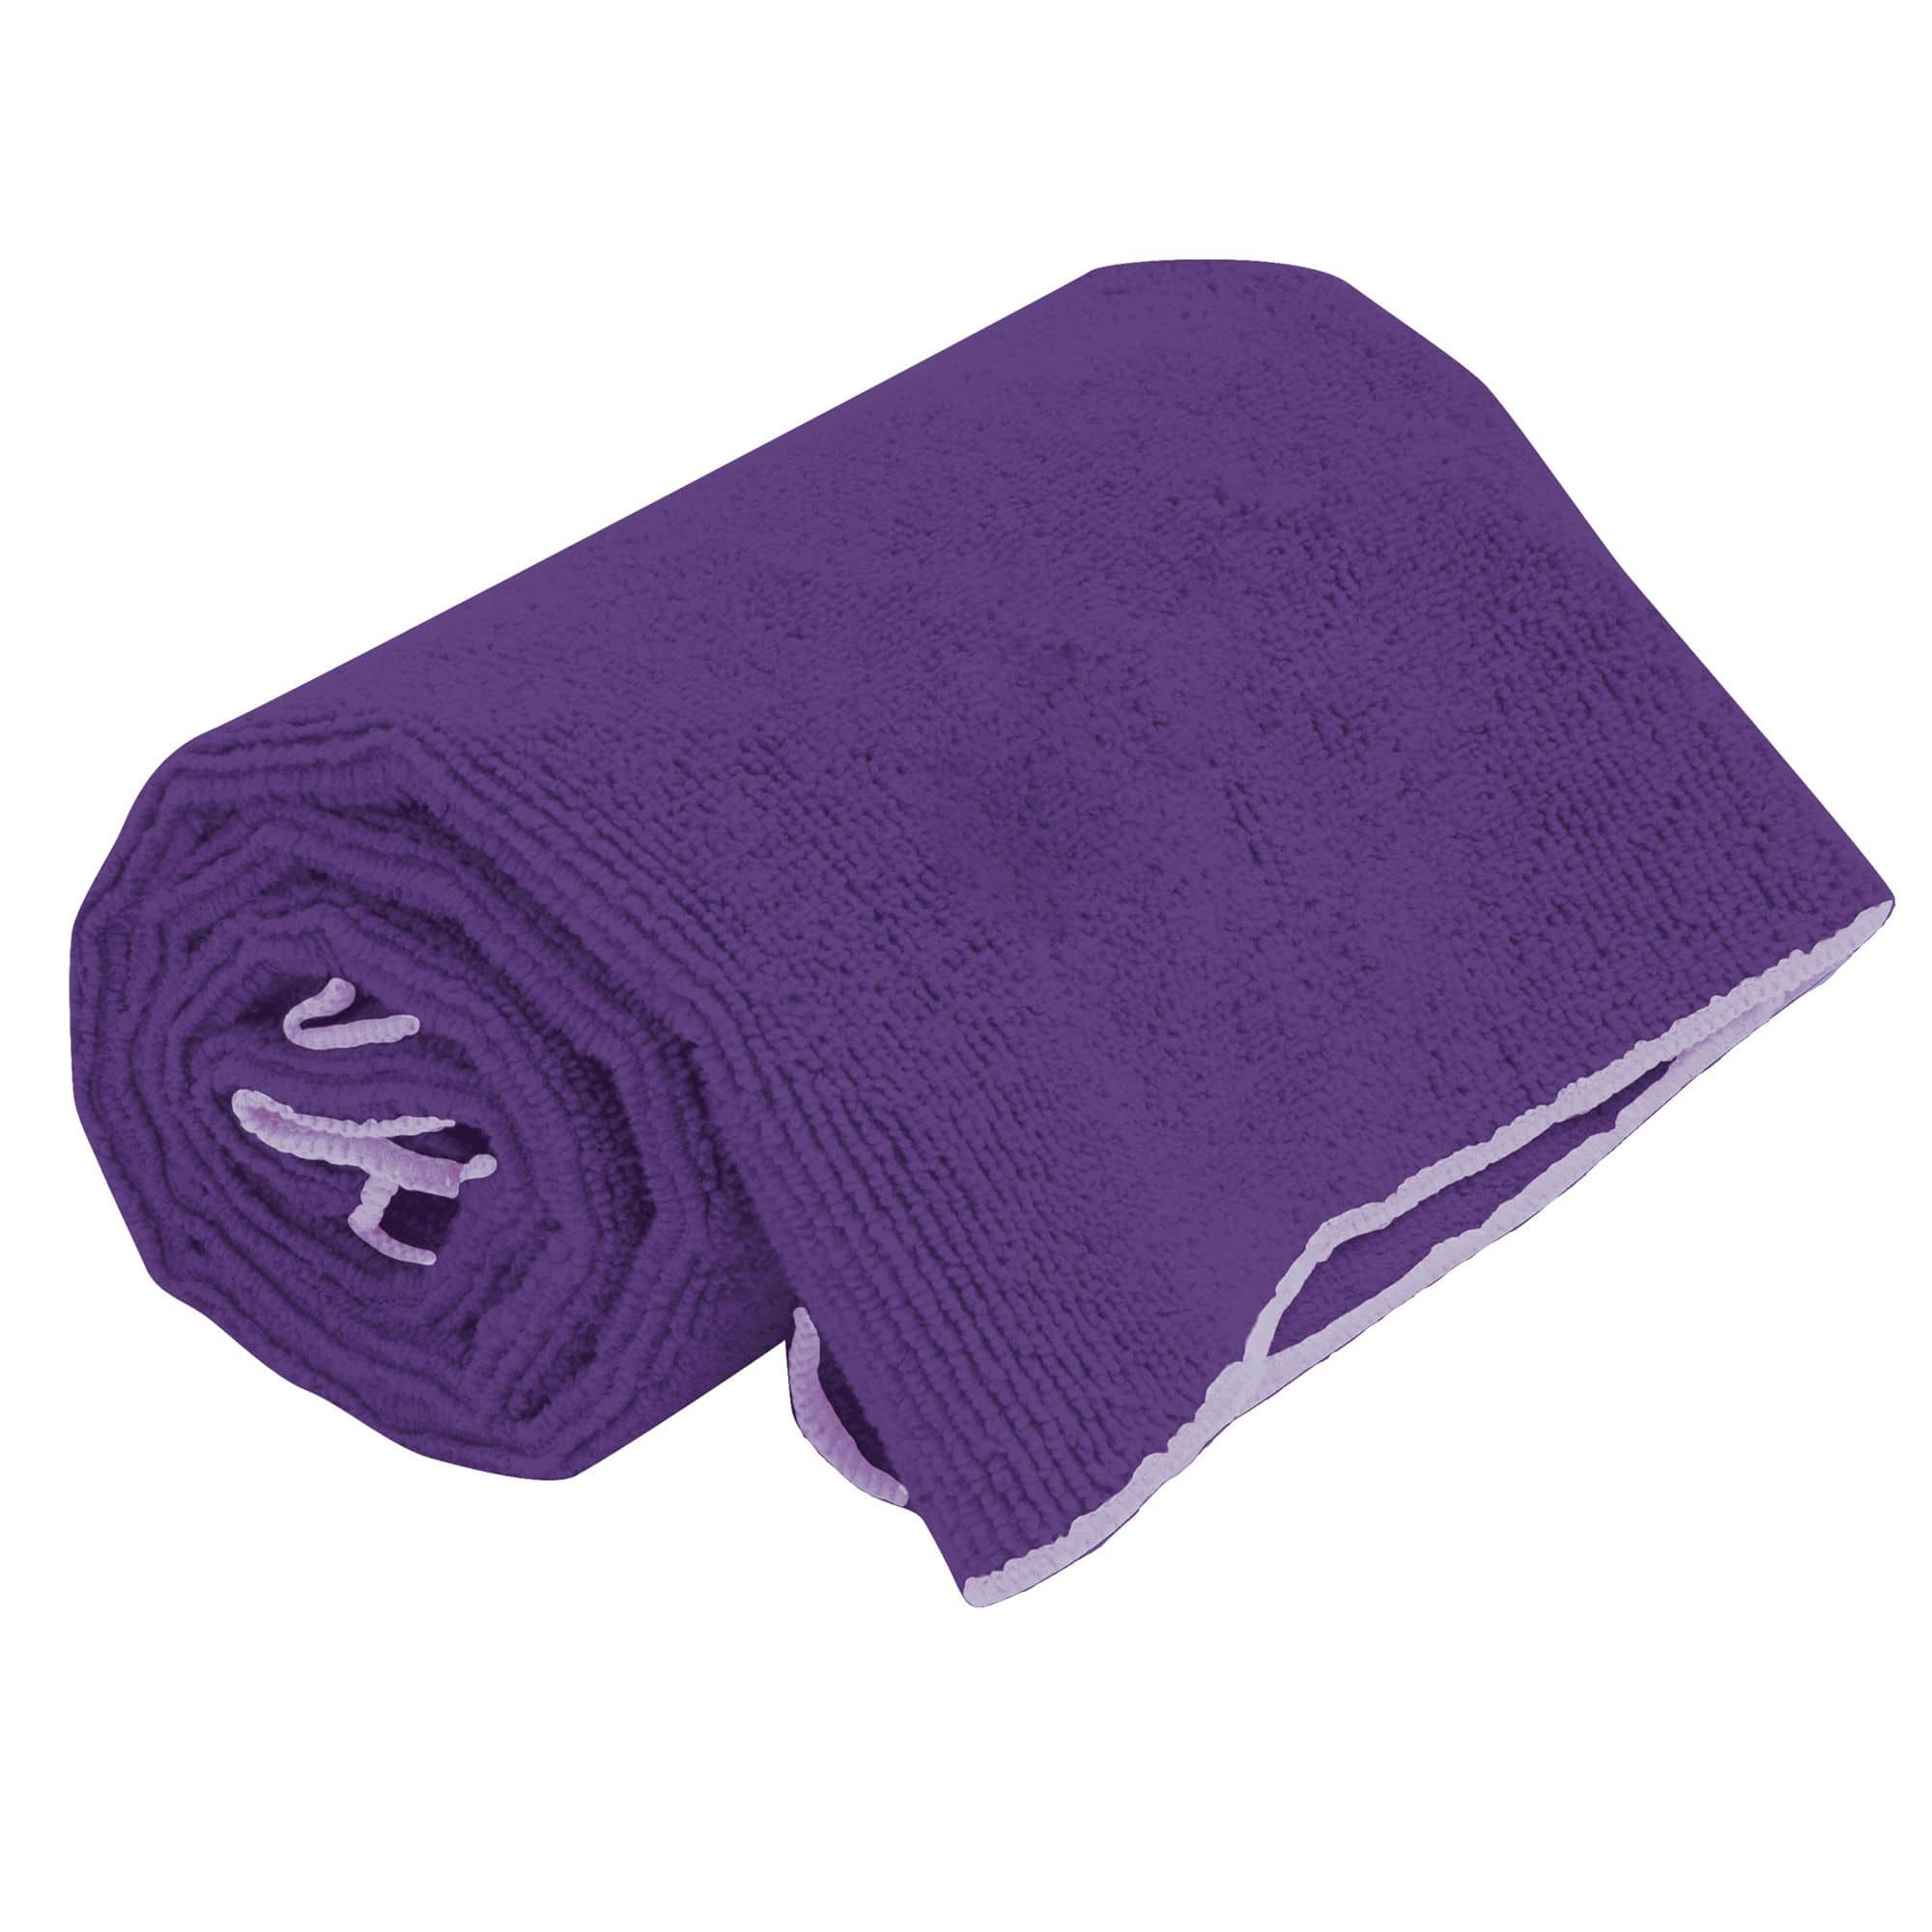 Evolve Yoga Hand Towel 20 X 30 Gaiam Gray Polyester NEW